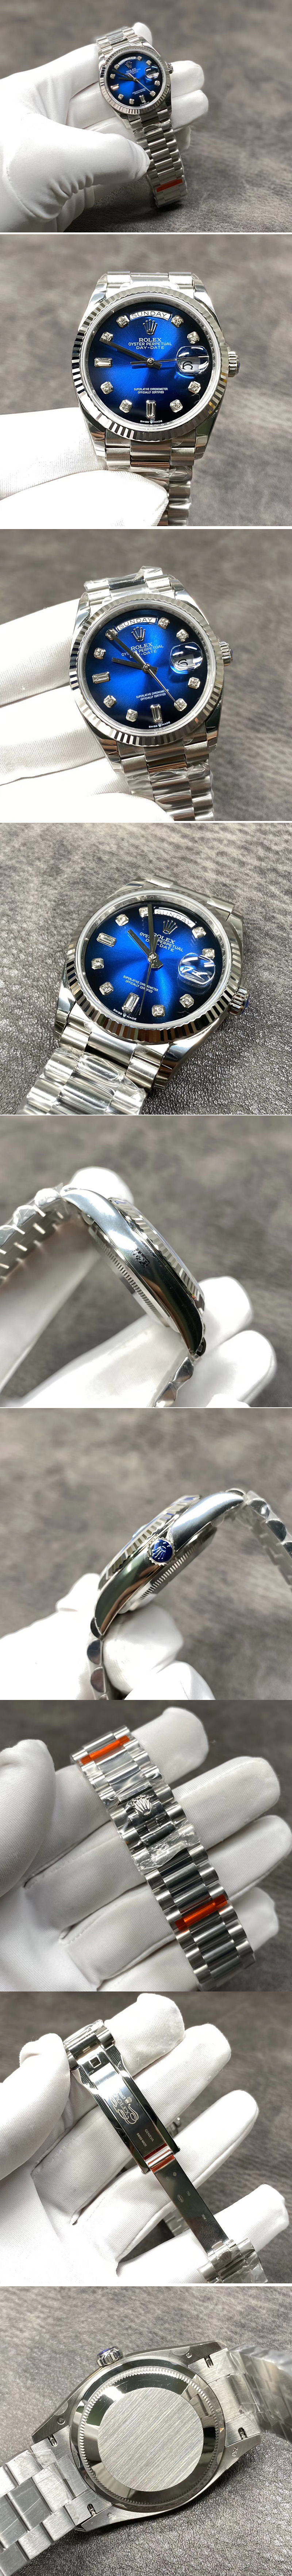 Replica Rolex Day Date 36 128239 GMF 1:1 Best Edition 904L Steel Blue Dial Diamonds Markers on Bracelet A2836